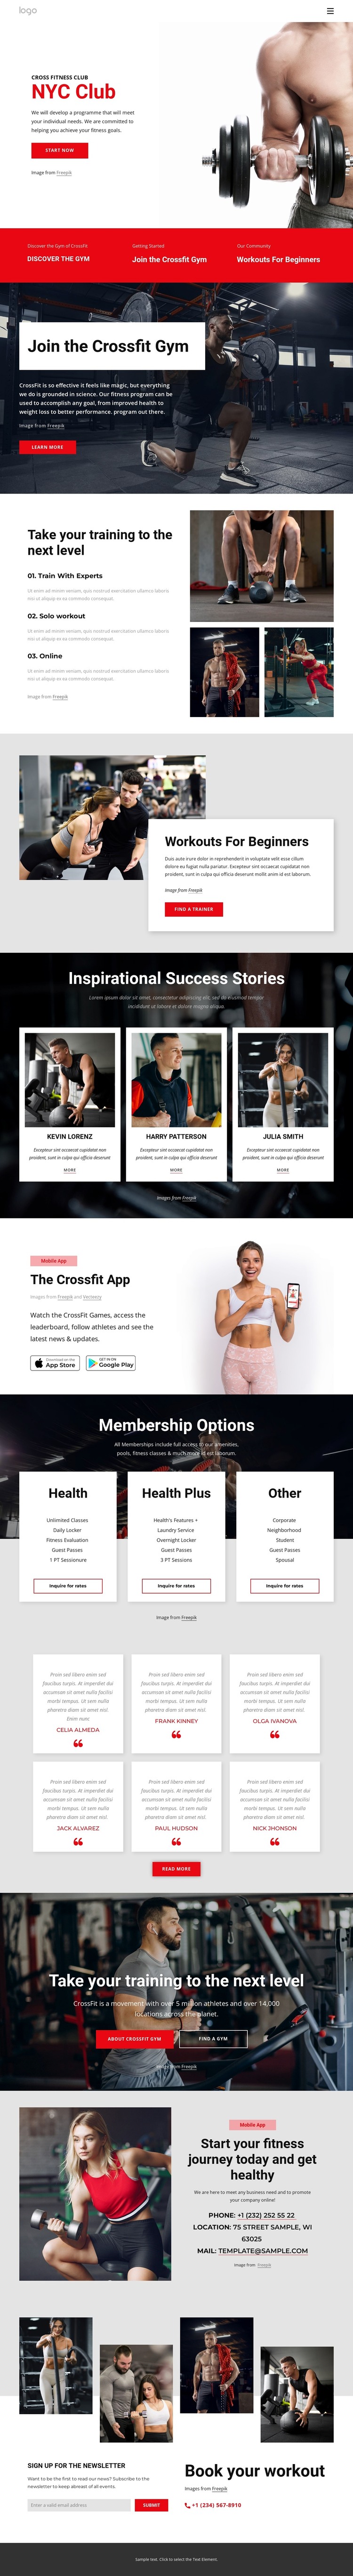 Cross fitness club Web Design